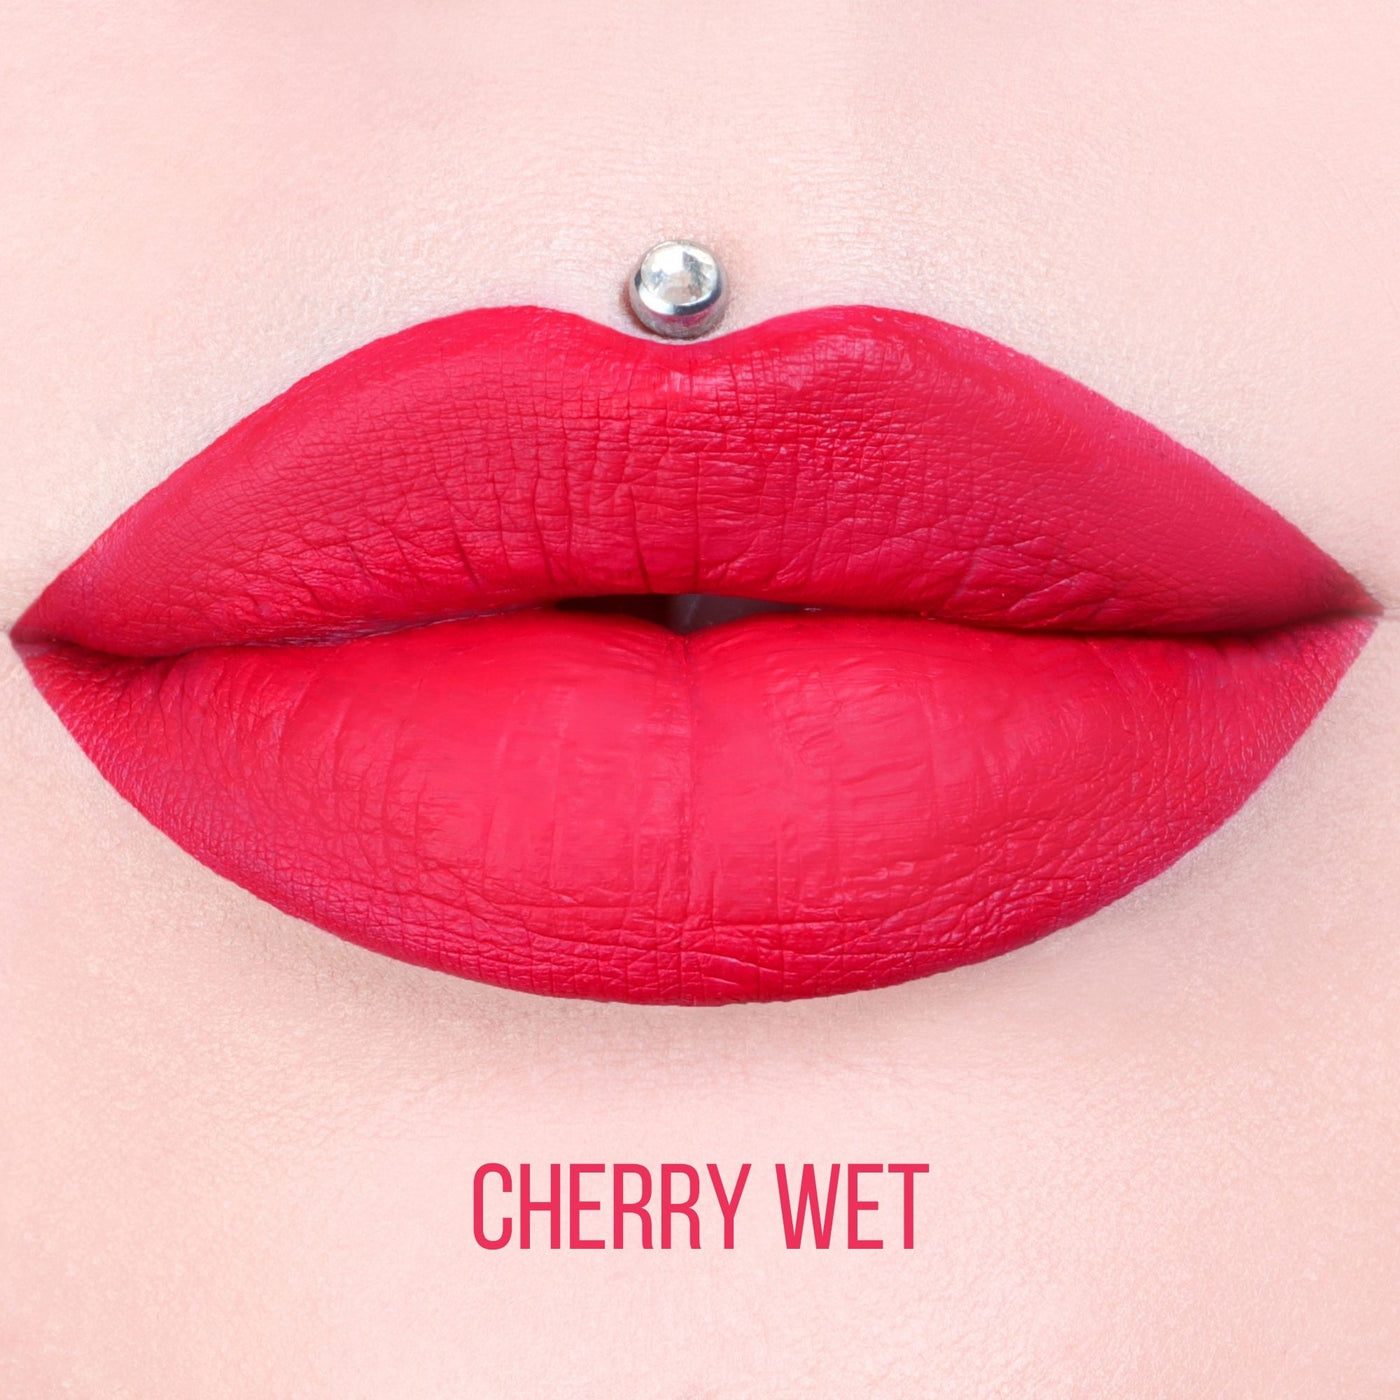 Jeffree Star Cosmetics - Velour Liquid Lipstick